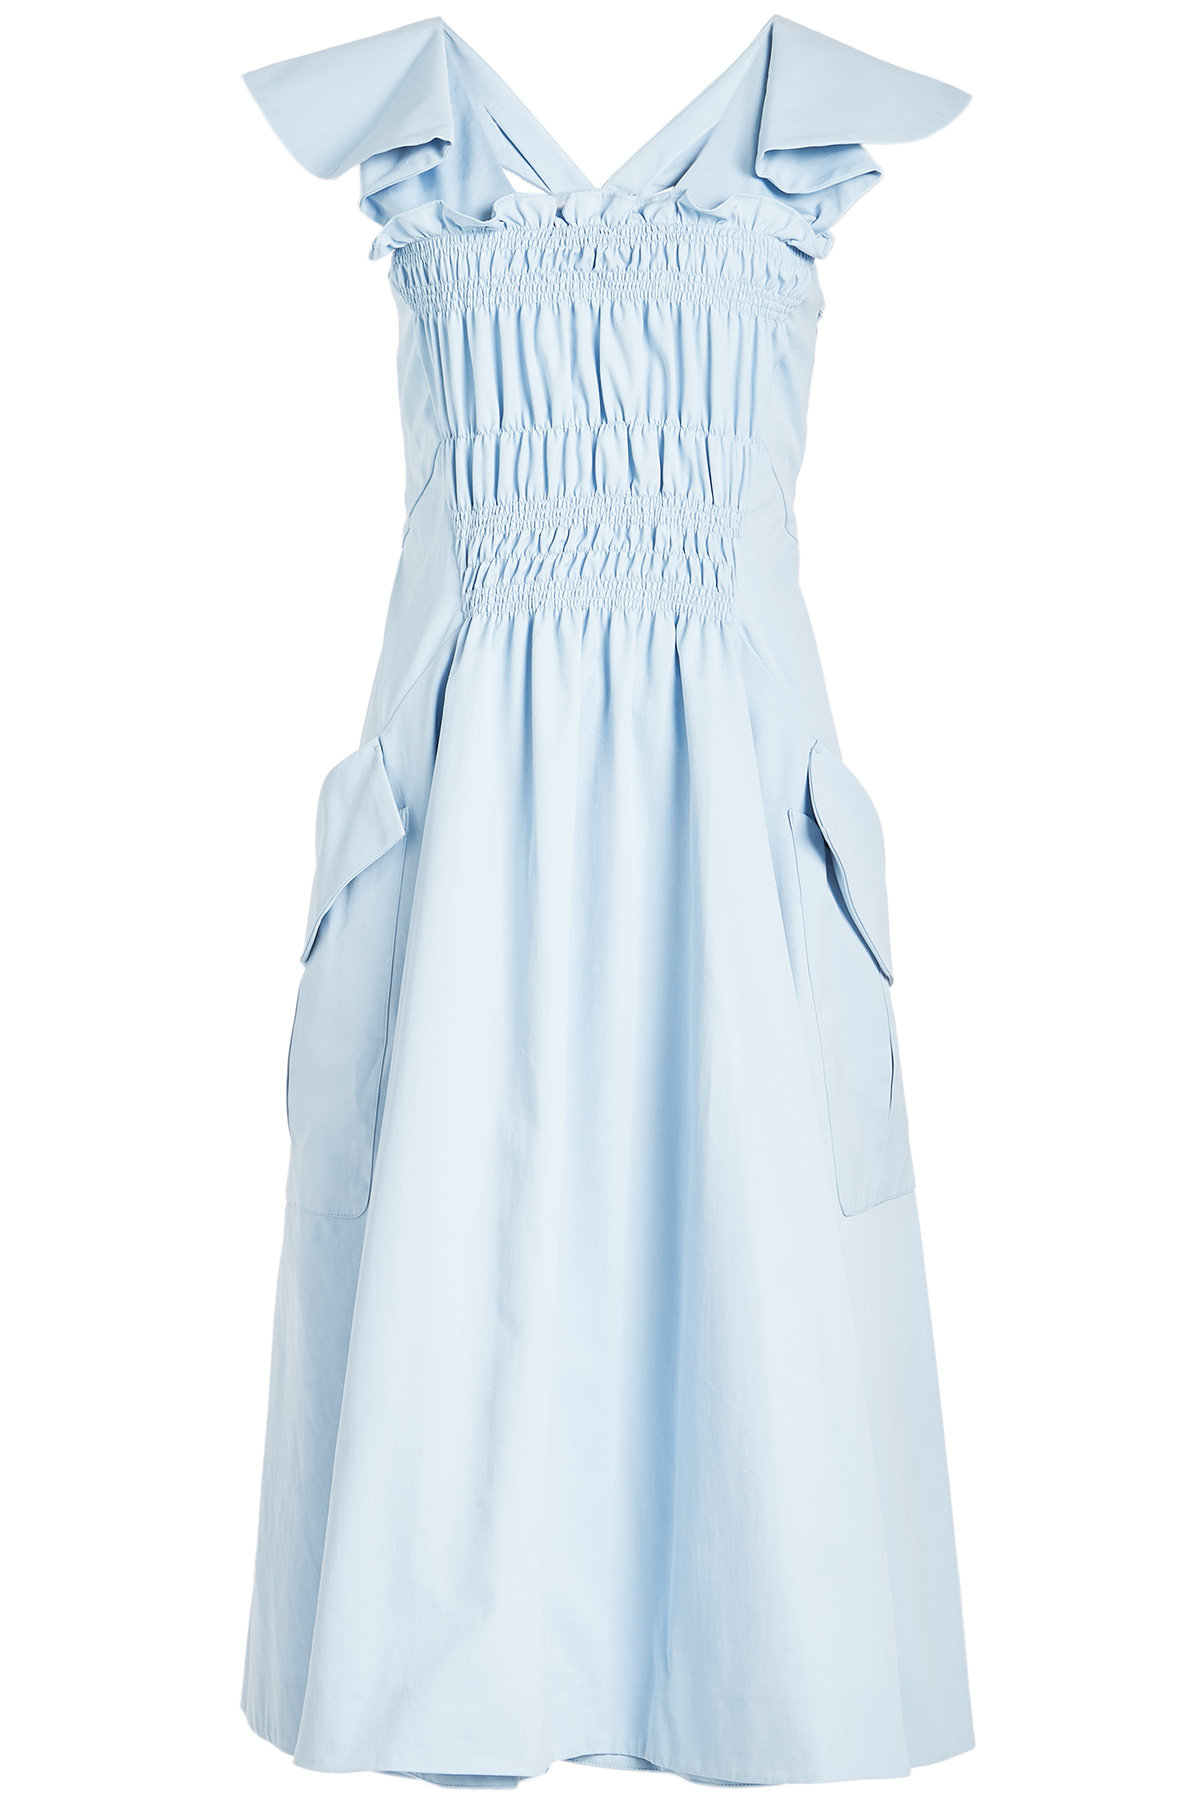 Carven - Ruched Cotton Dress